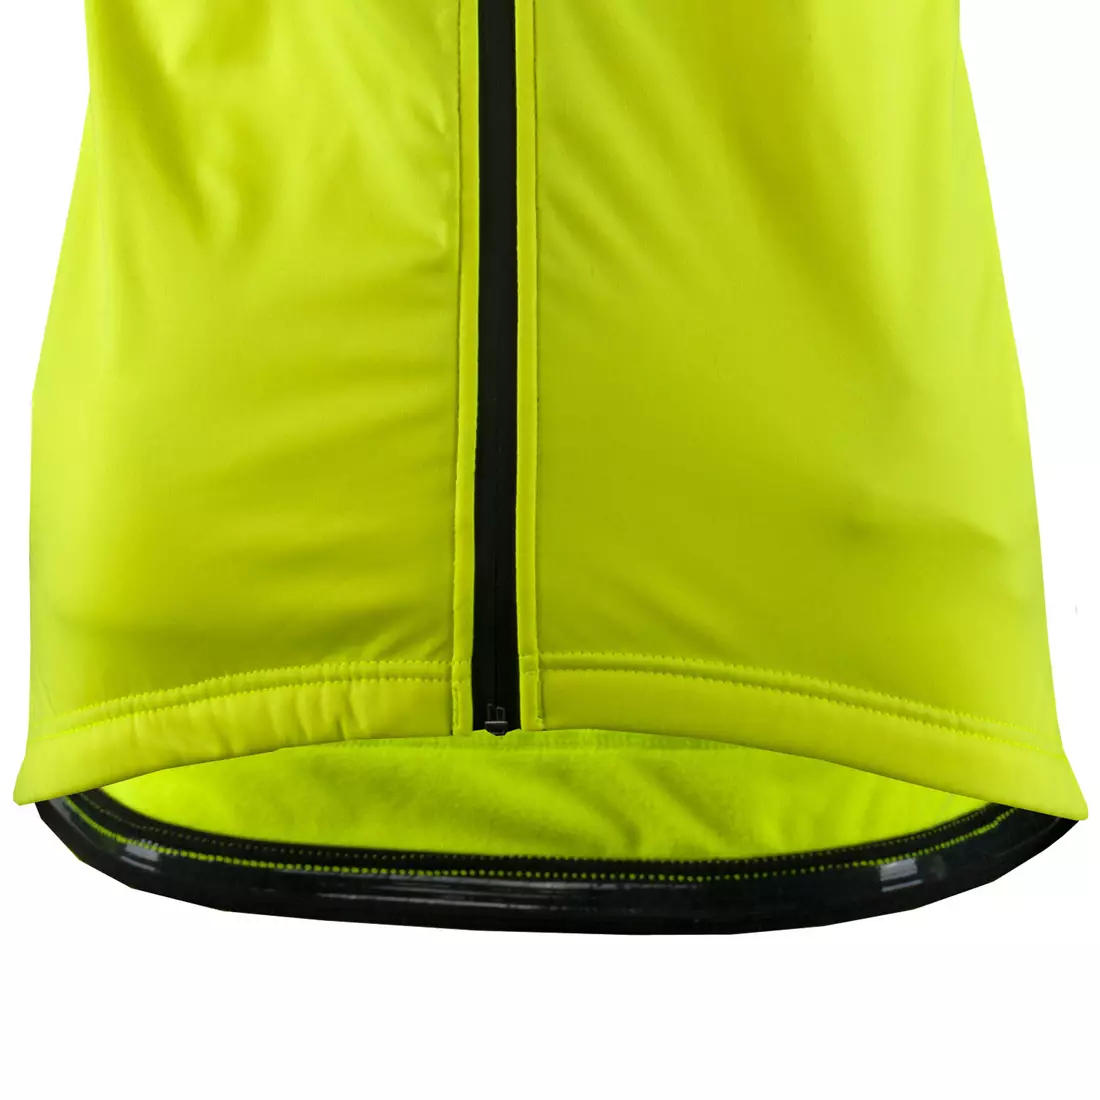 KAYMAQ JWS-003 men's winter softshell bike jacket fluo yellow